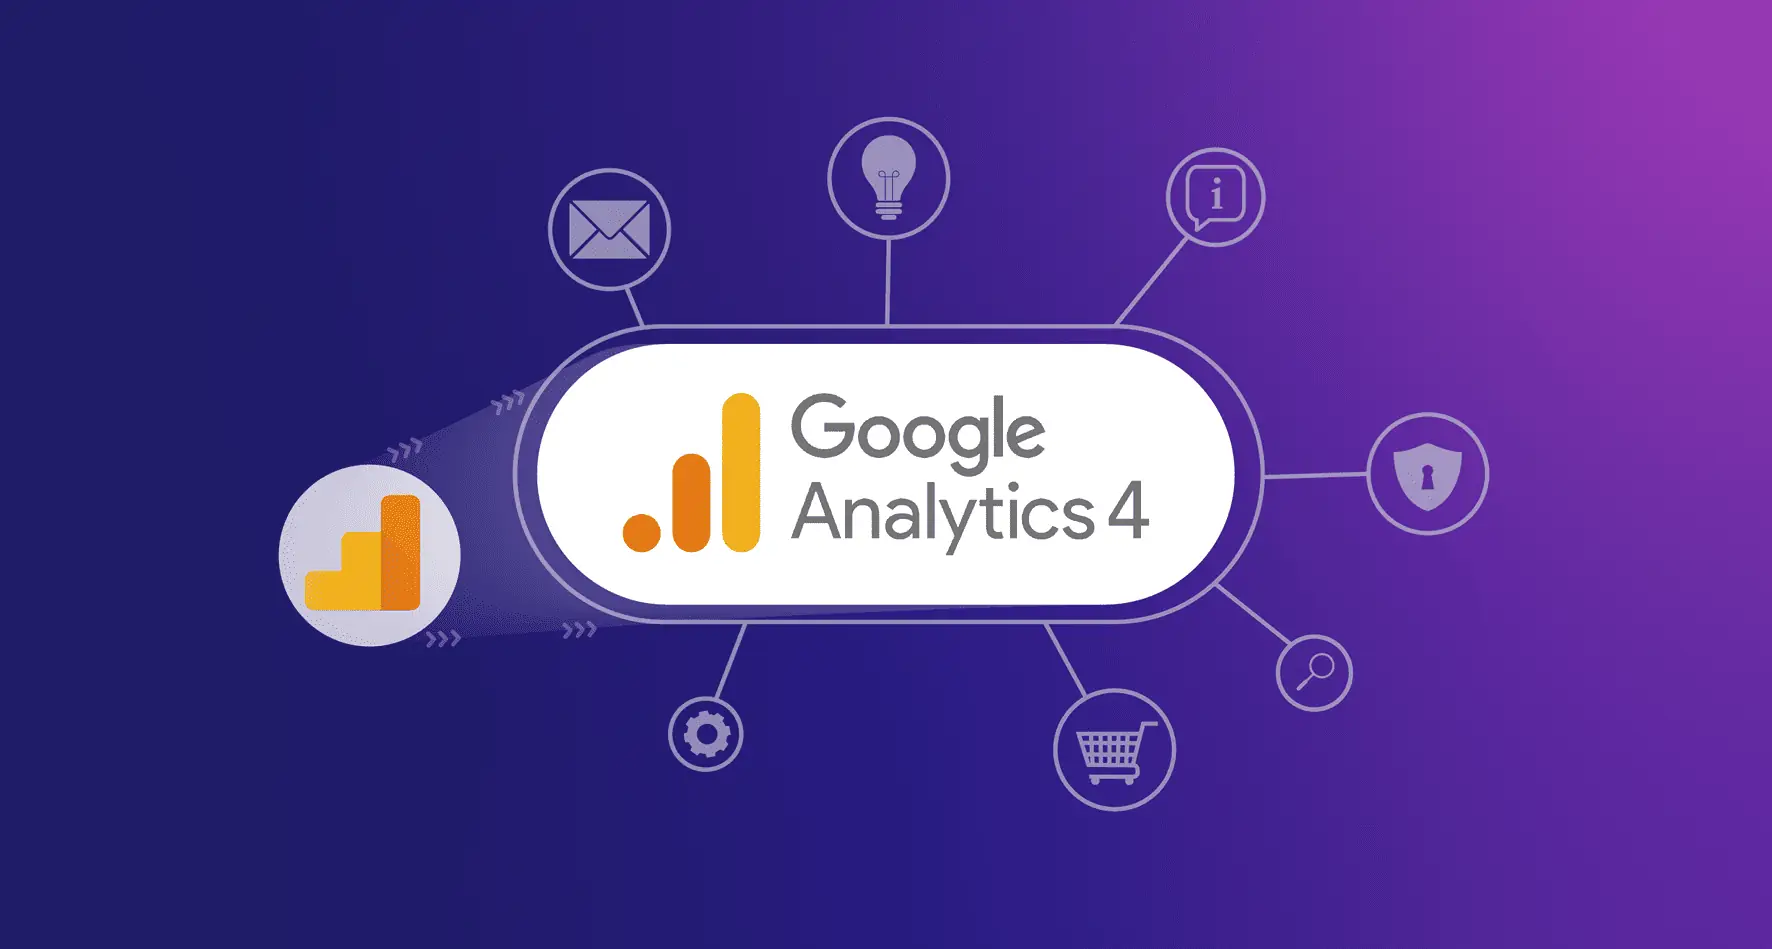 Google’s Universal Analytics is retiring – migrate to Google Analytics 4 now